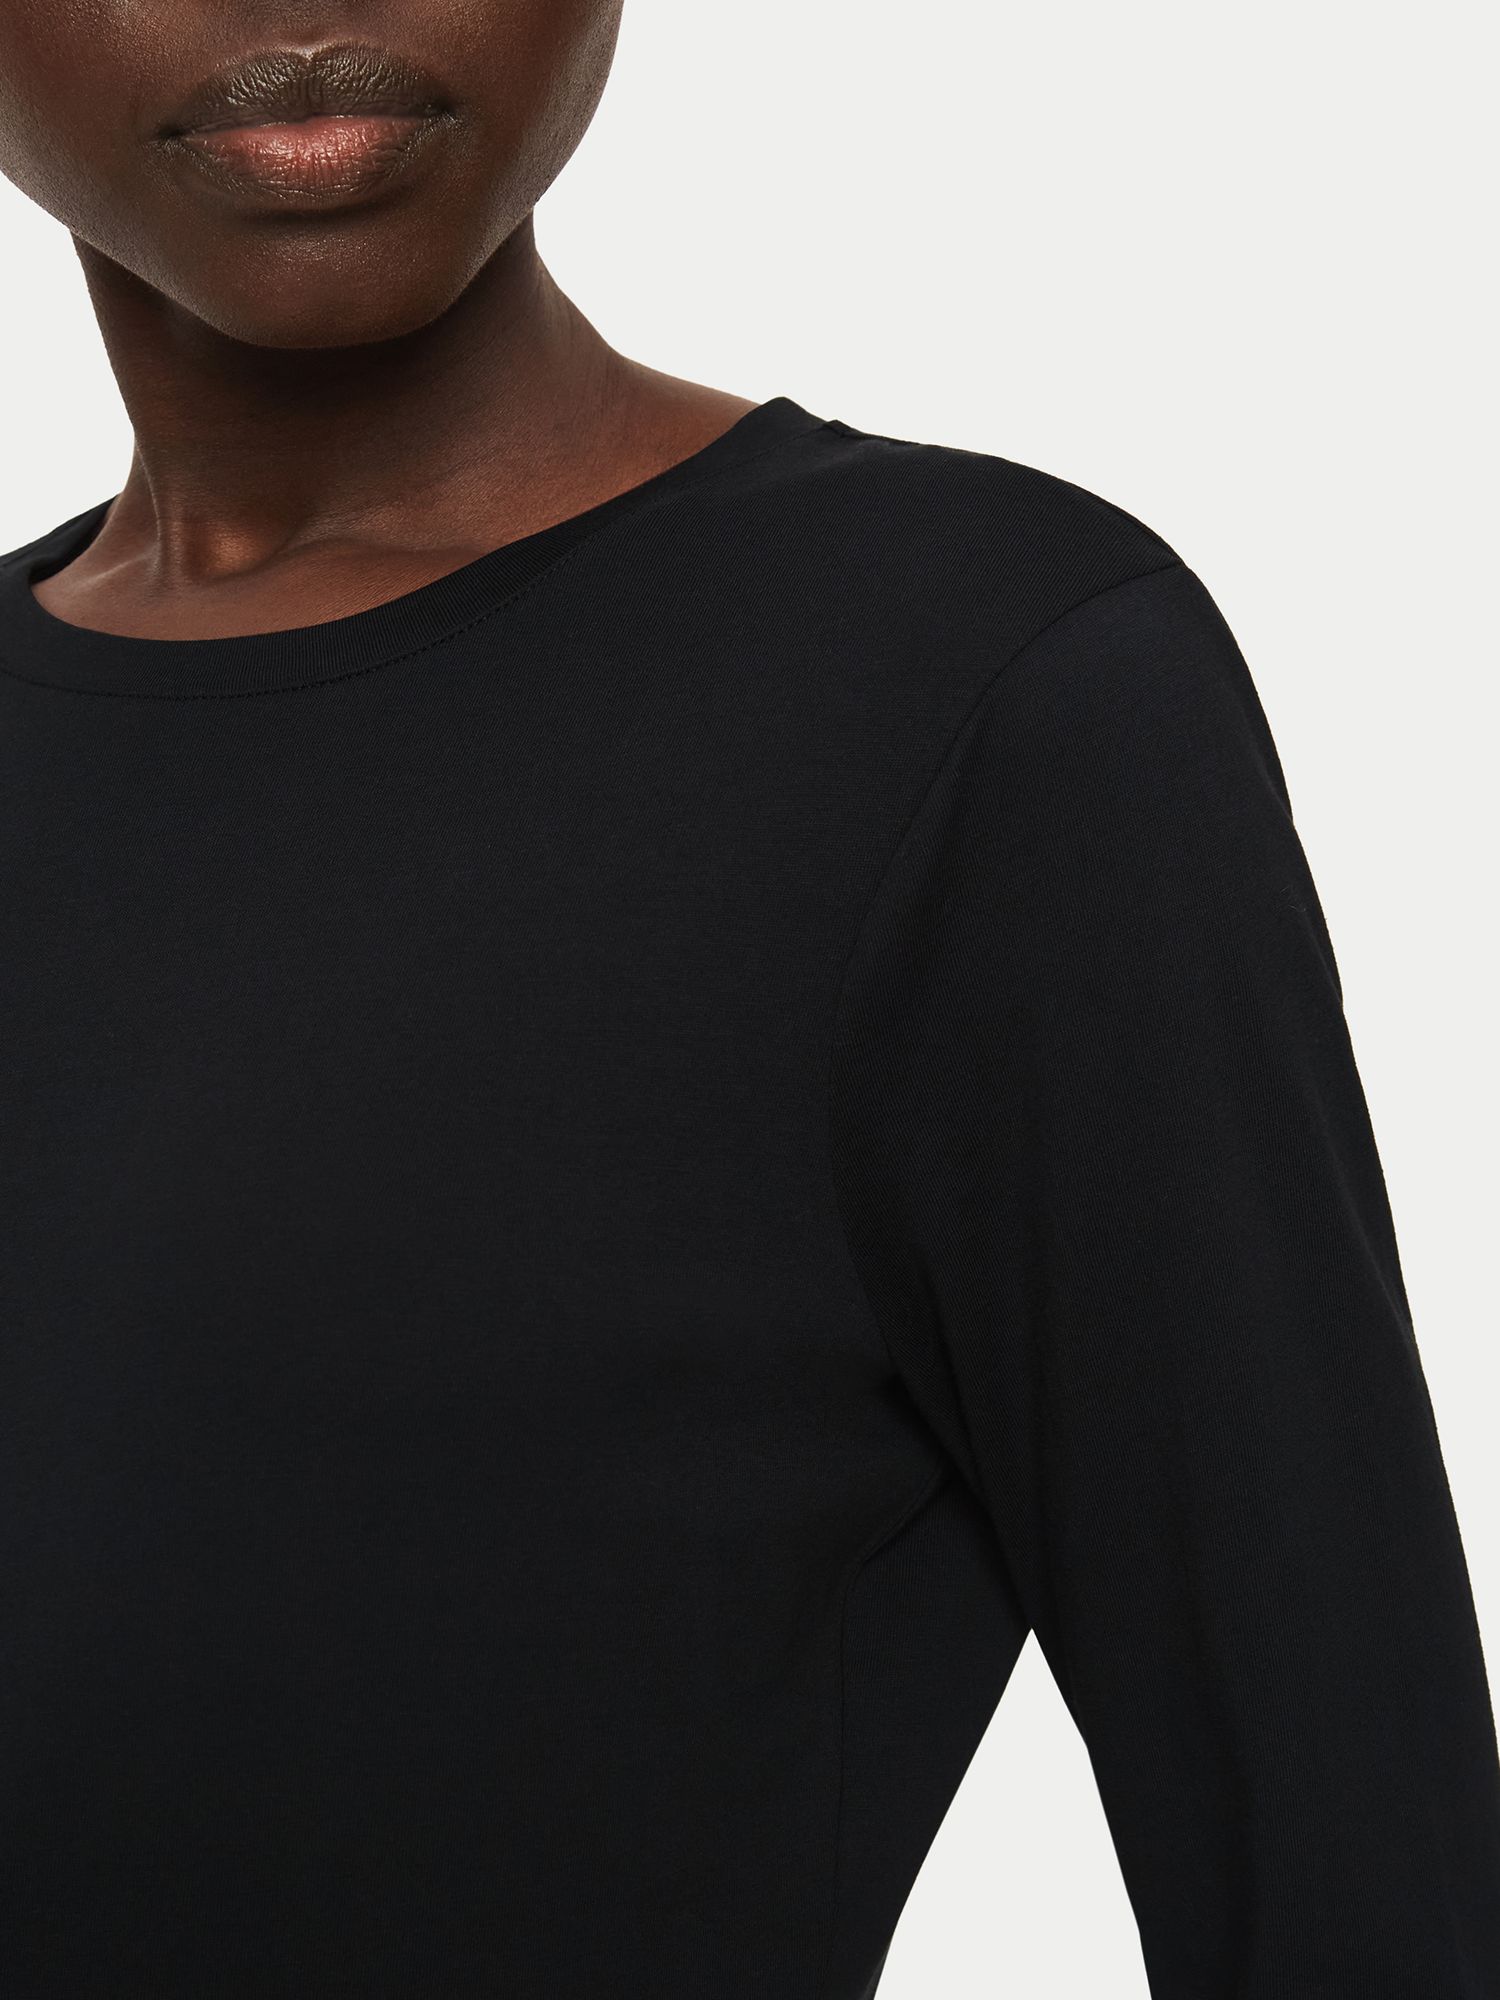 Jigsaw Supima Cotton Long Sleeve T-Shirt, Black, M